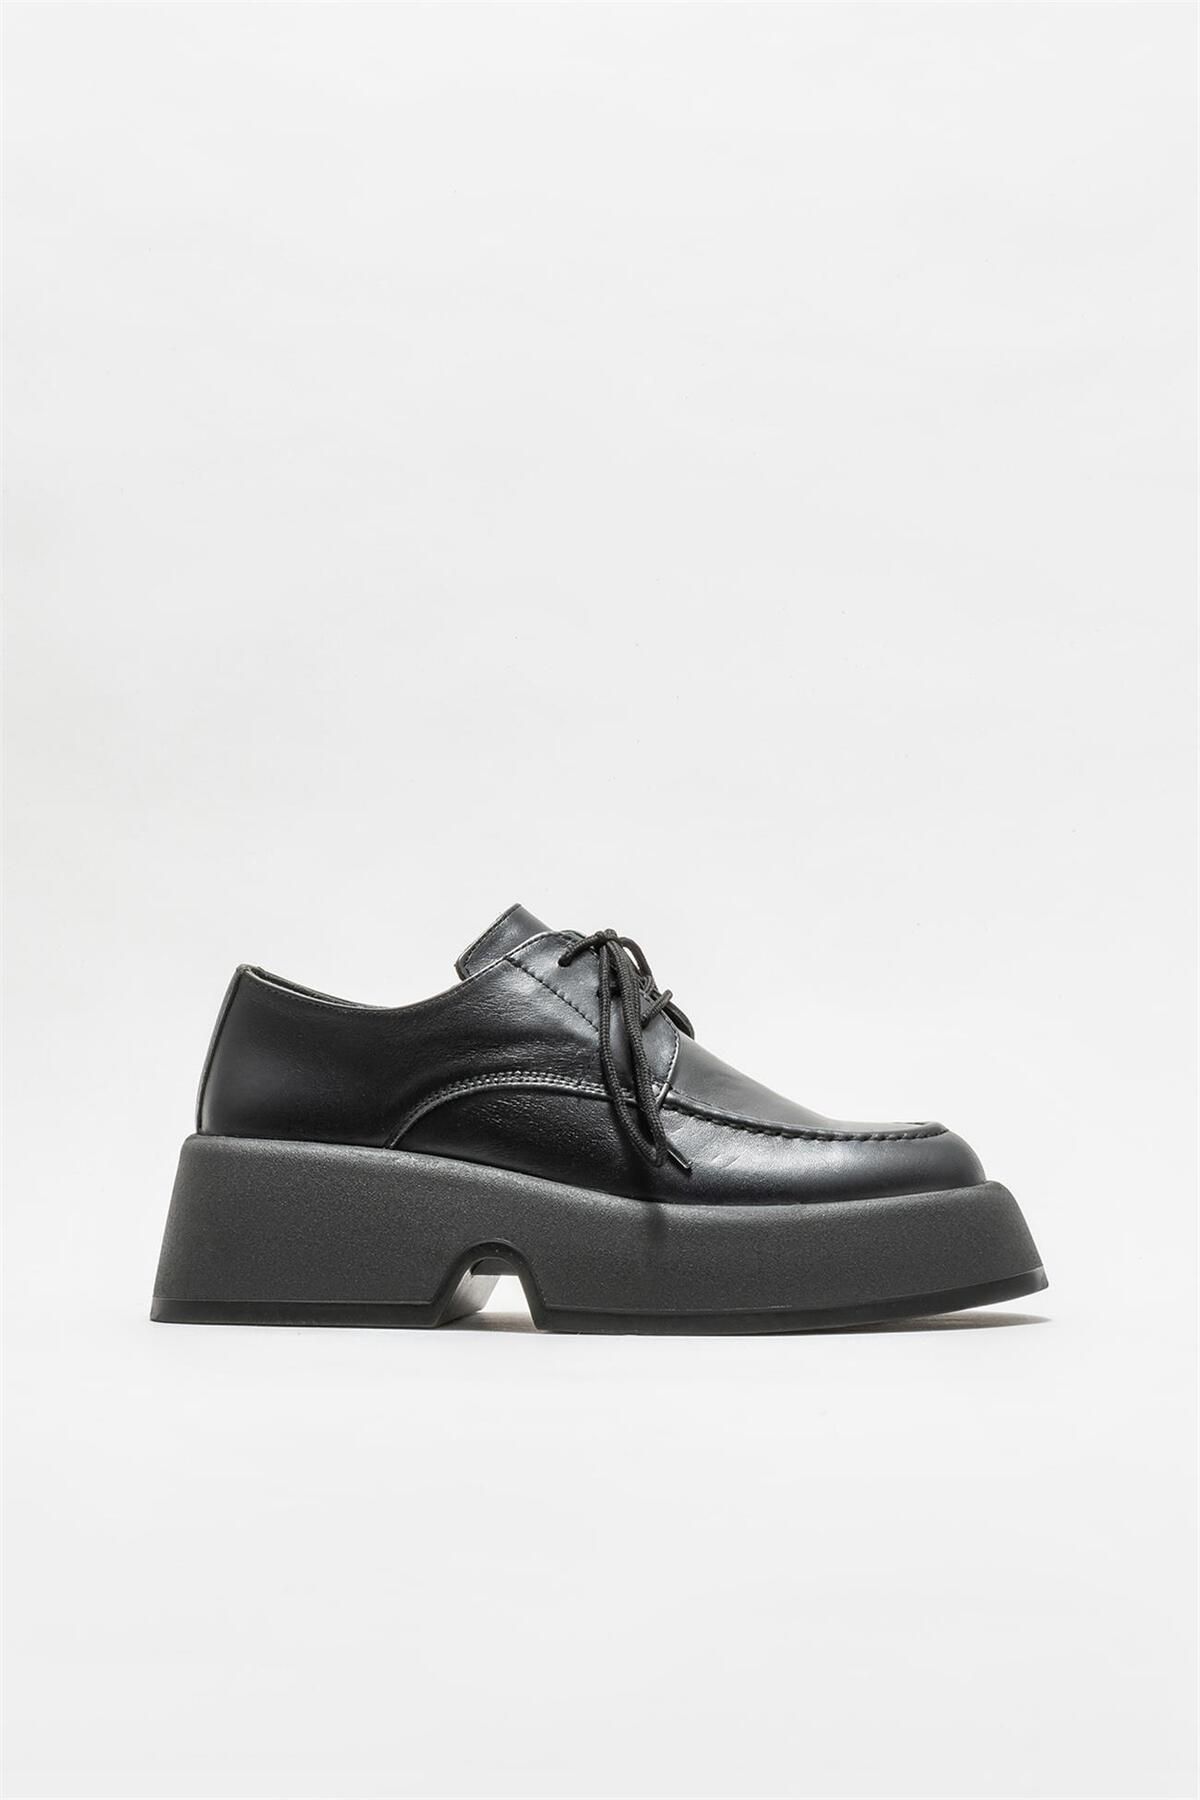 Elle Shoes Siyah Deri Kadın Oxford